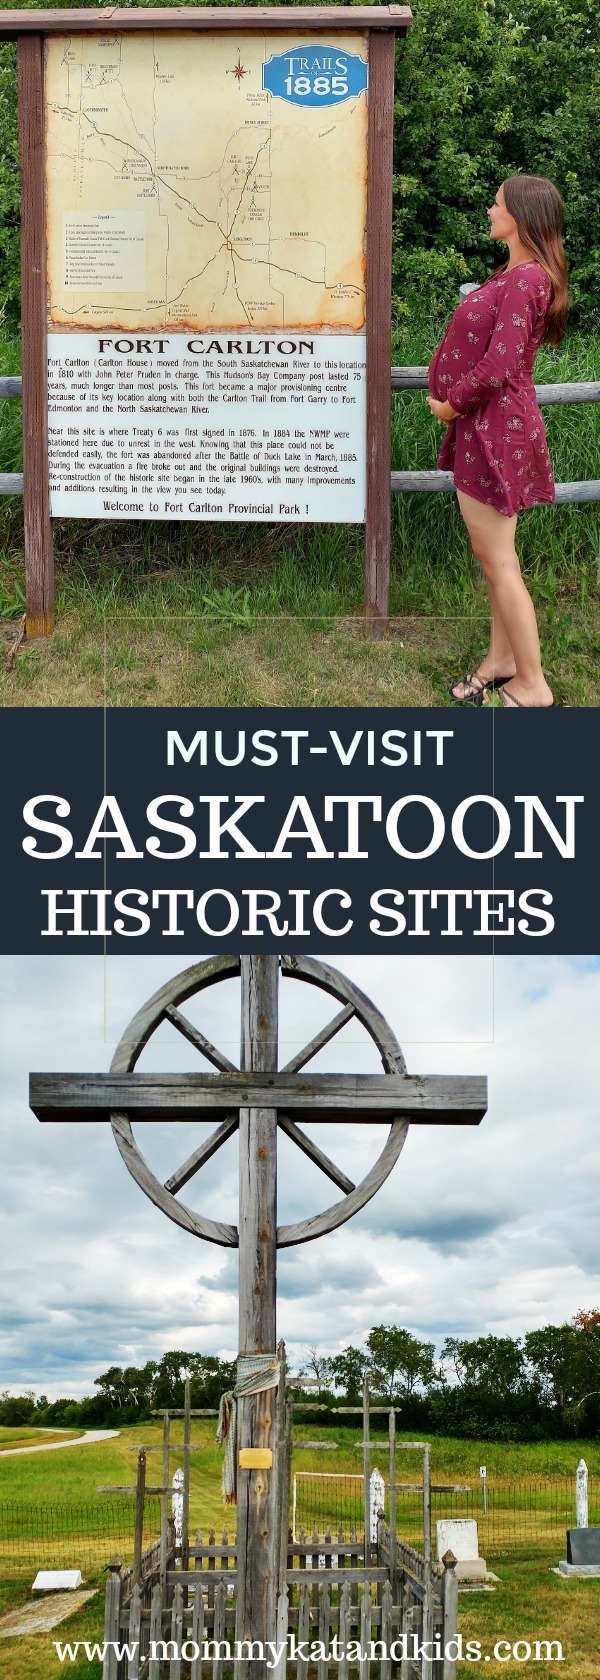 must-visit saskatoon historic sites